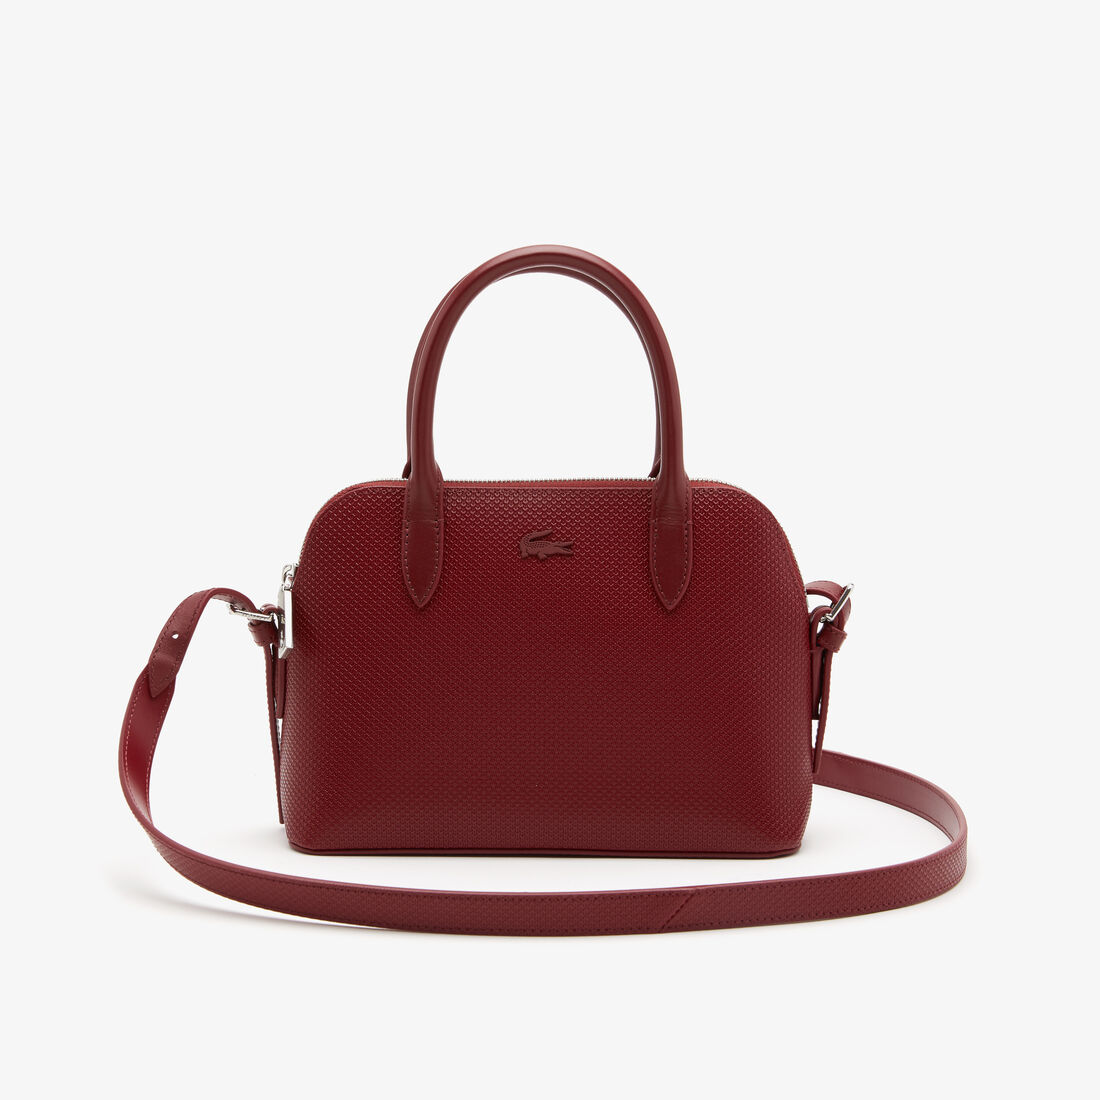 Women's Chantaco Pique Leather Top Handle Bag